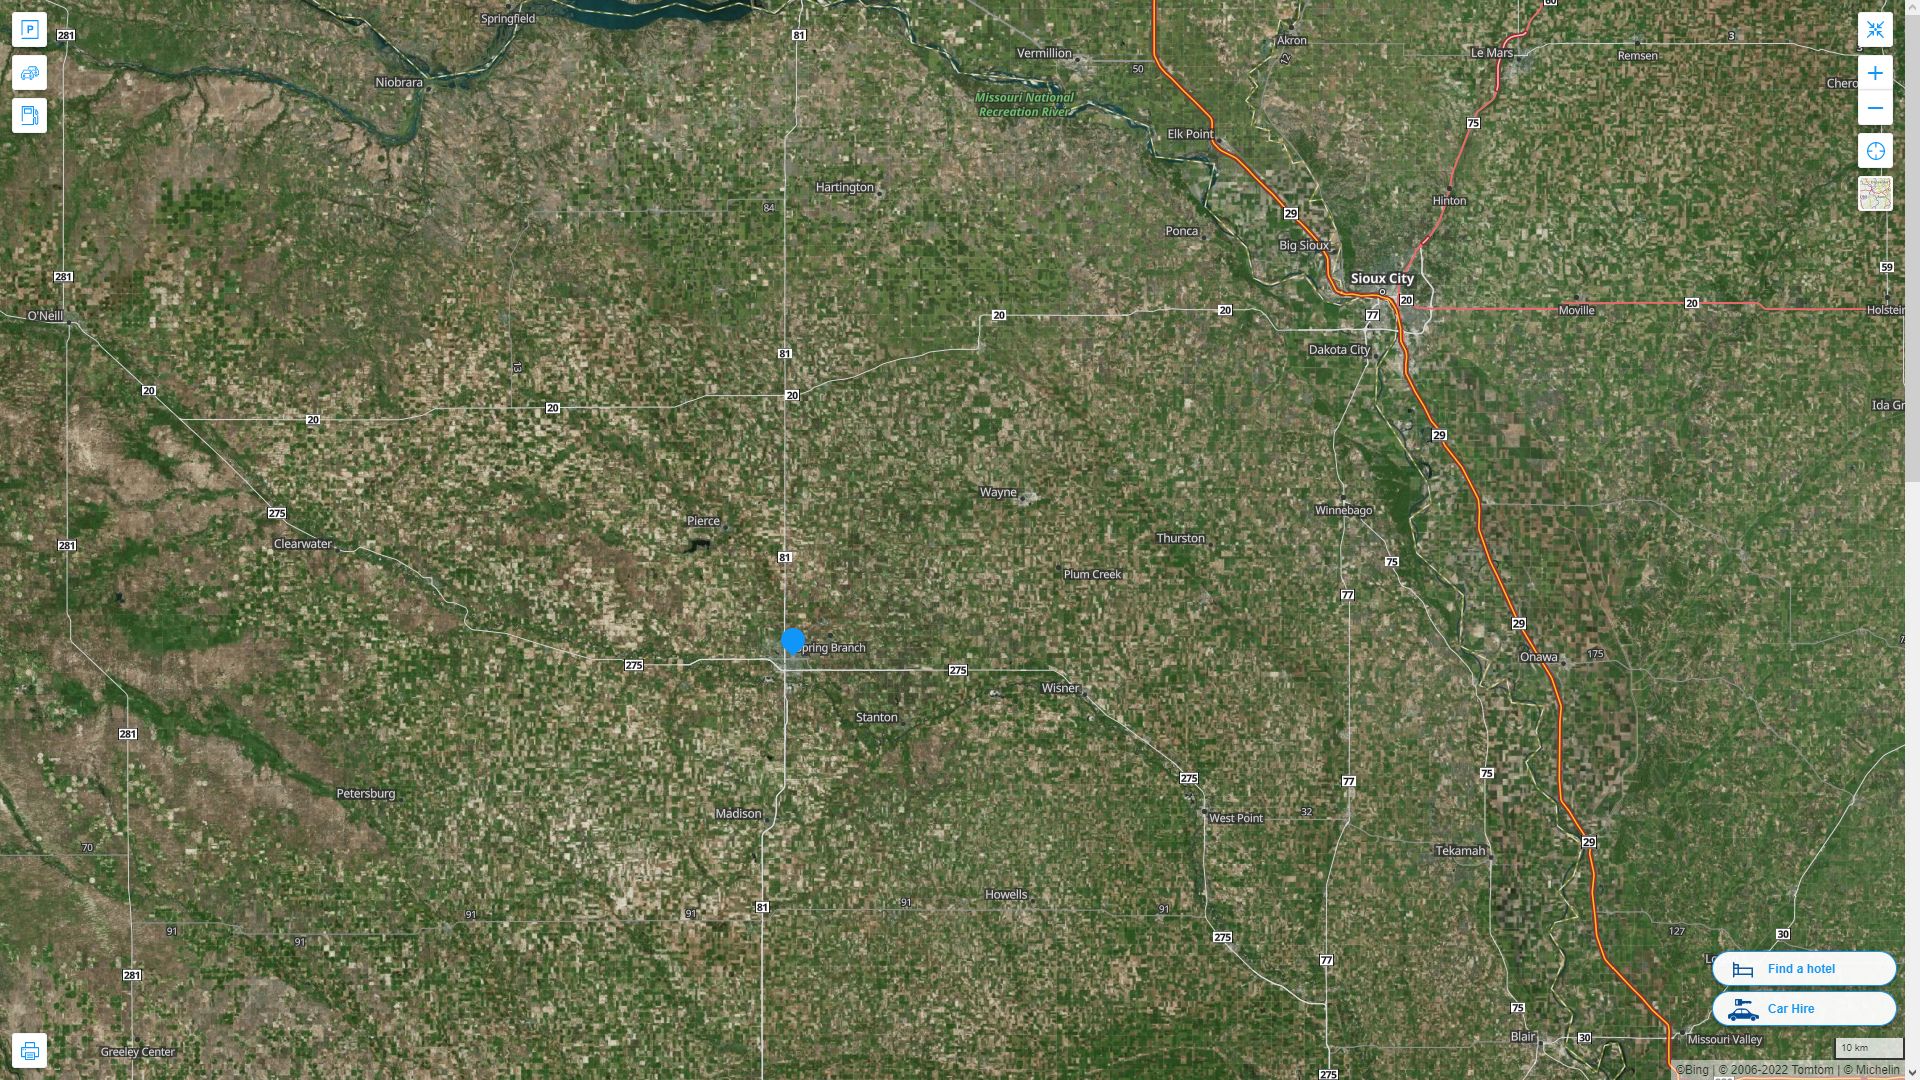 Norfolk Nebraska Highway and Road Map with Satellite View